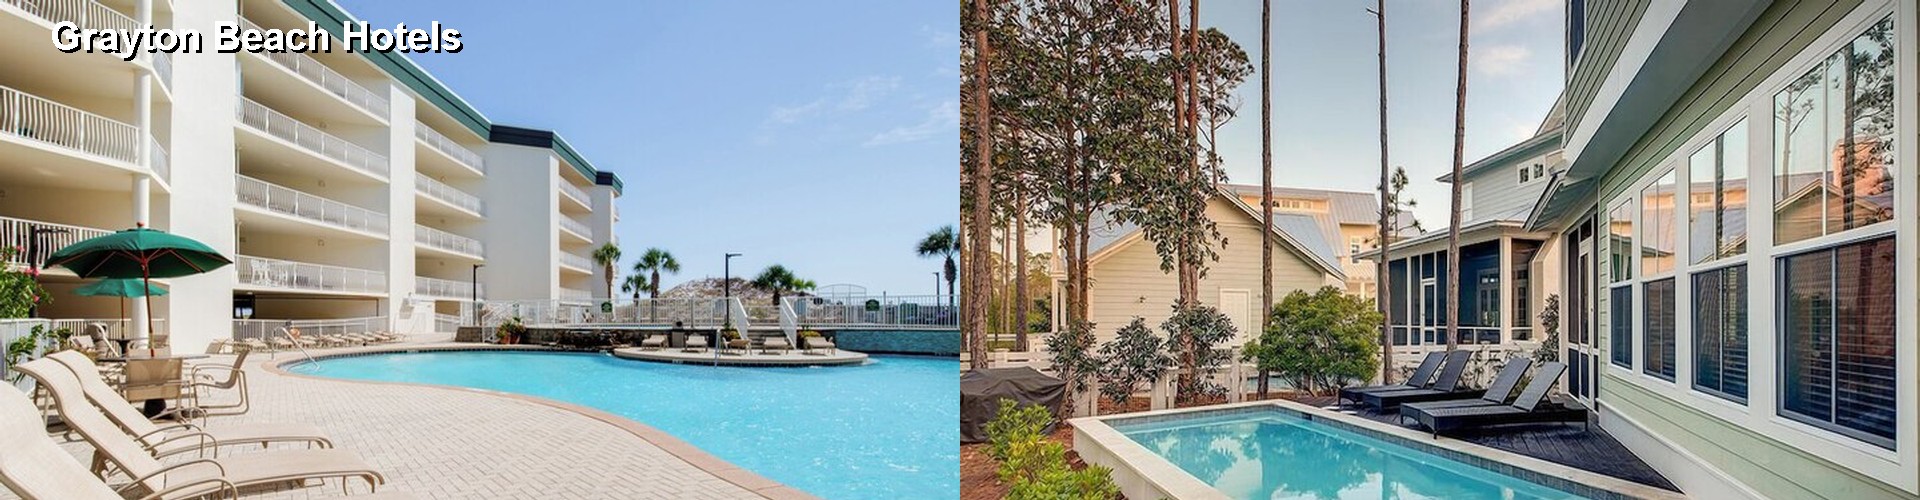 5 Best Hotels near Grayton Beach